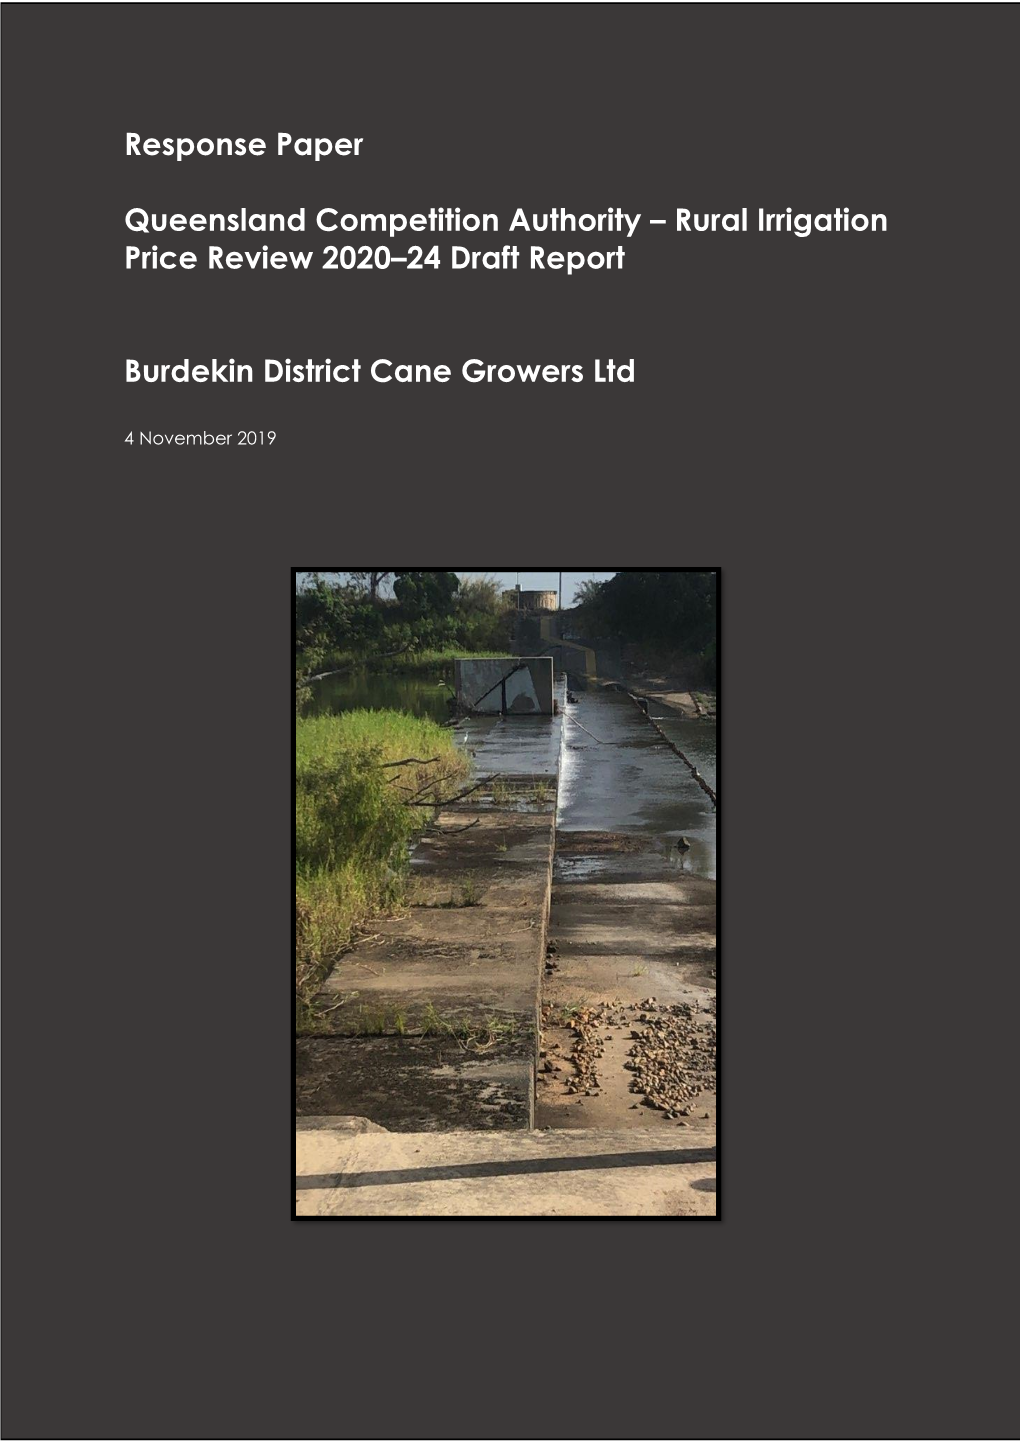 Burdekin District Cane Growers Ltd Submission